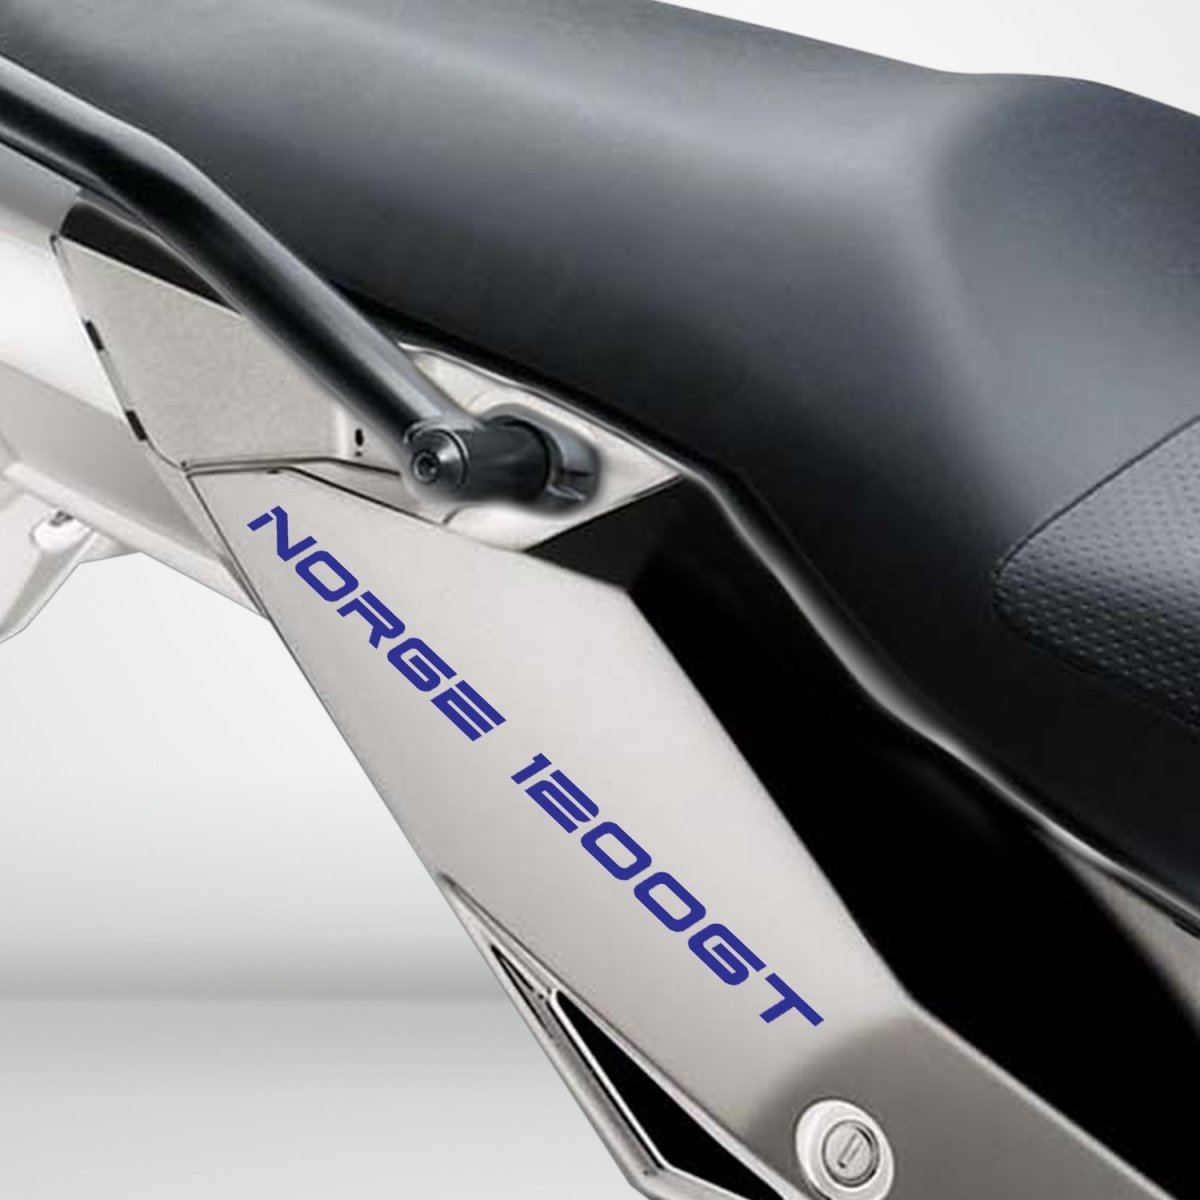 Motorcycle Superbike Sticker Decal Pack Waterproof for Moto Guzzi Norge 1200 GT - Stickman Vinyls